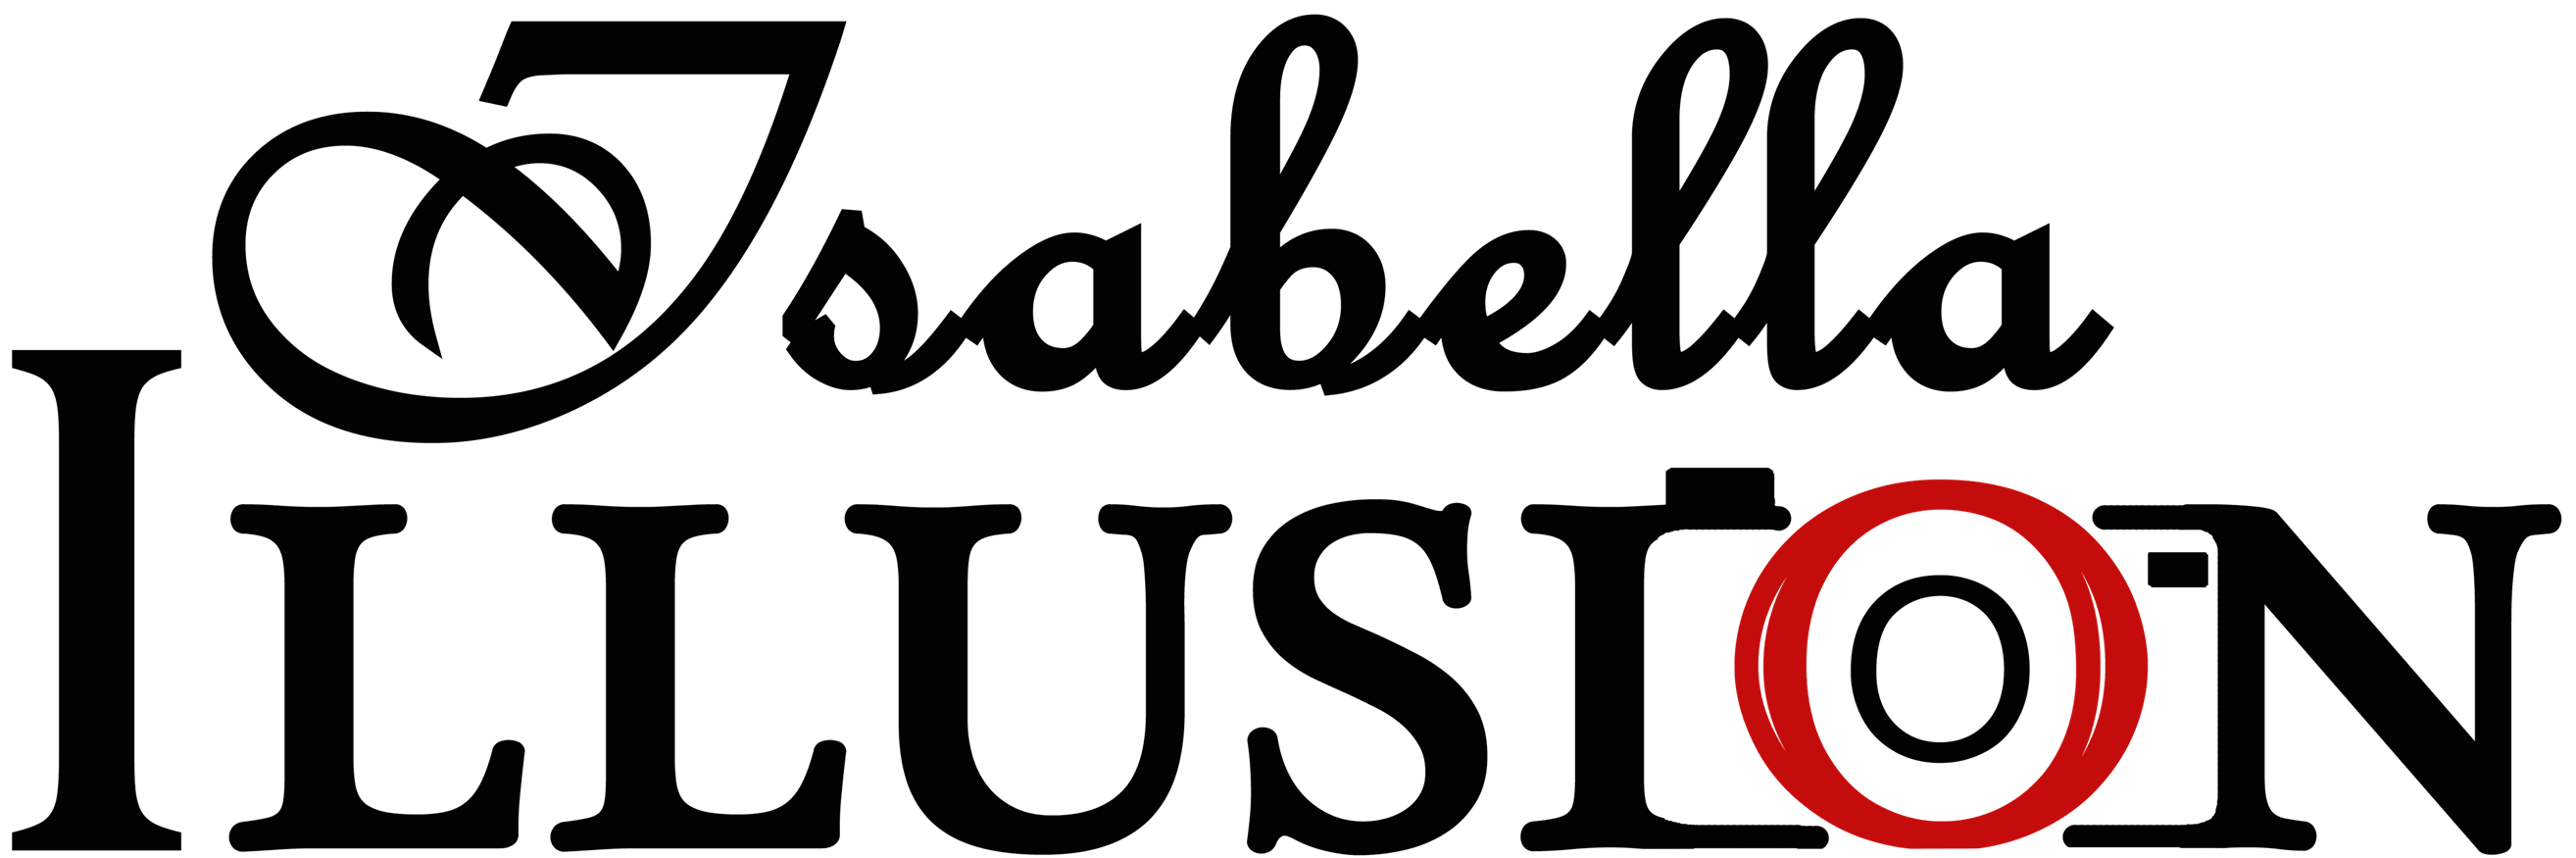 isabella illusion logo black